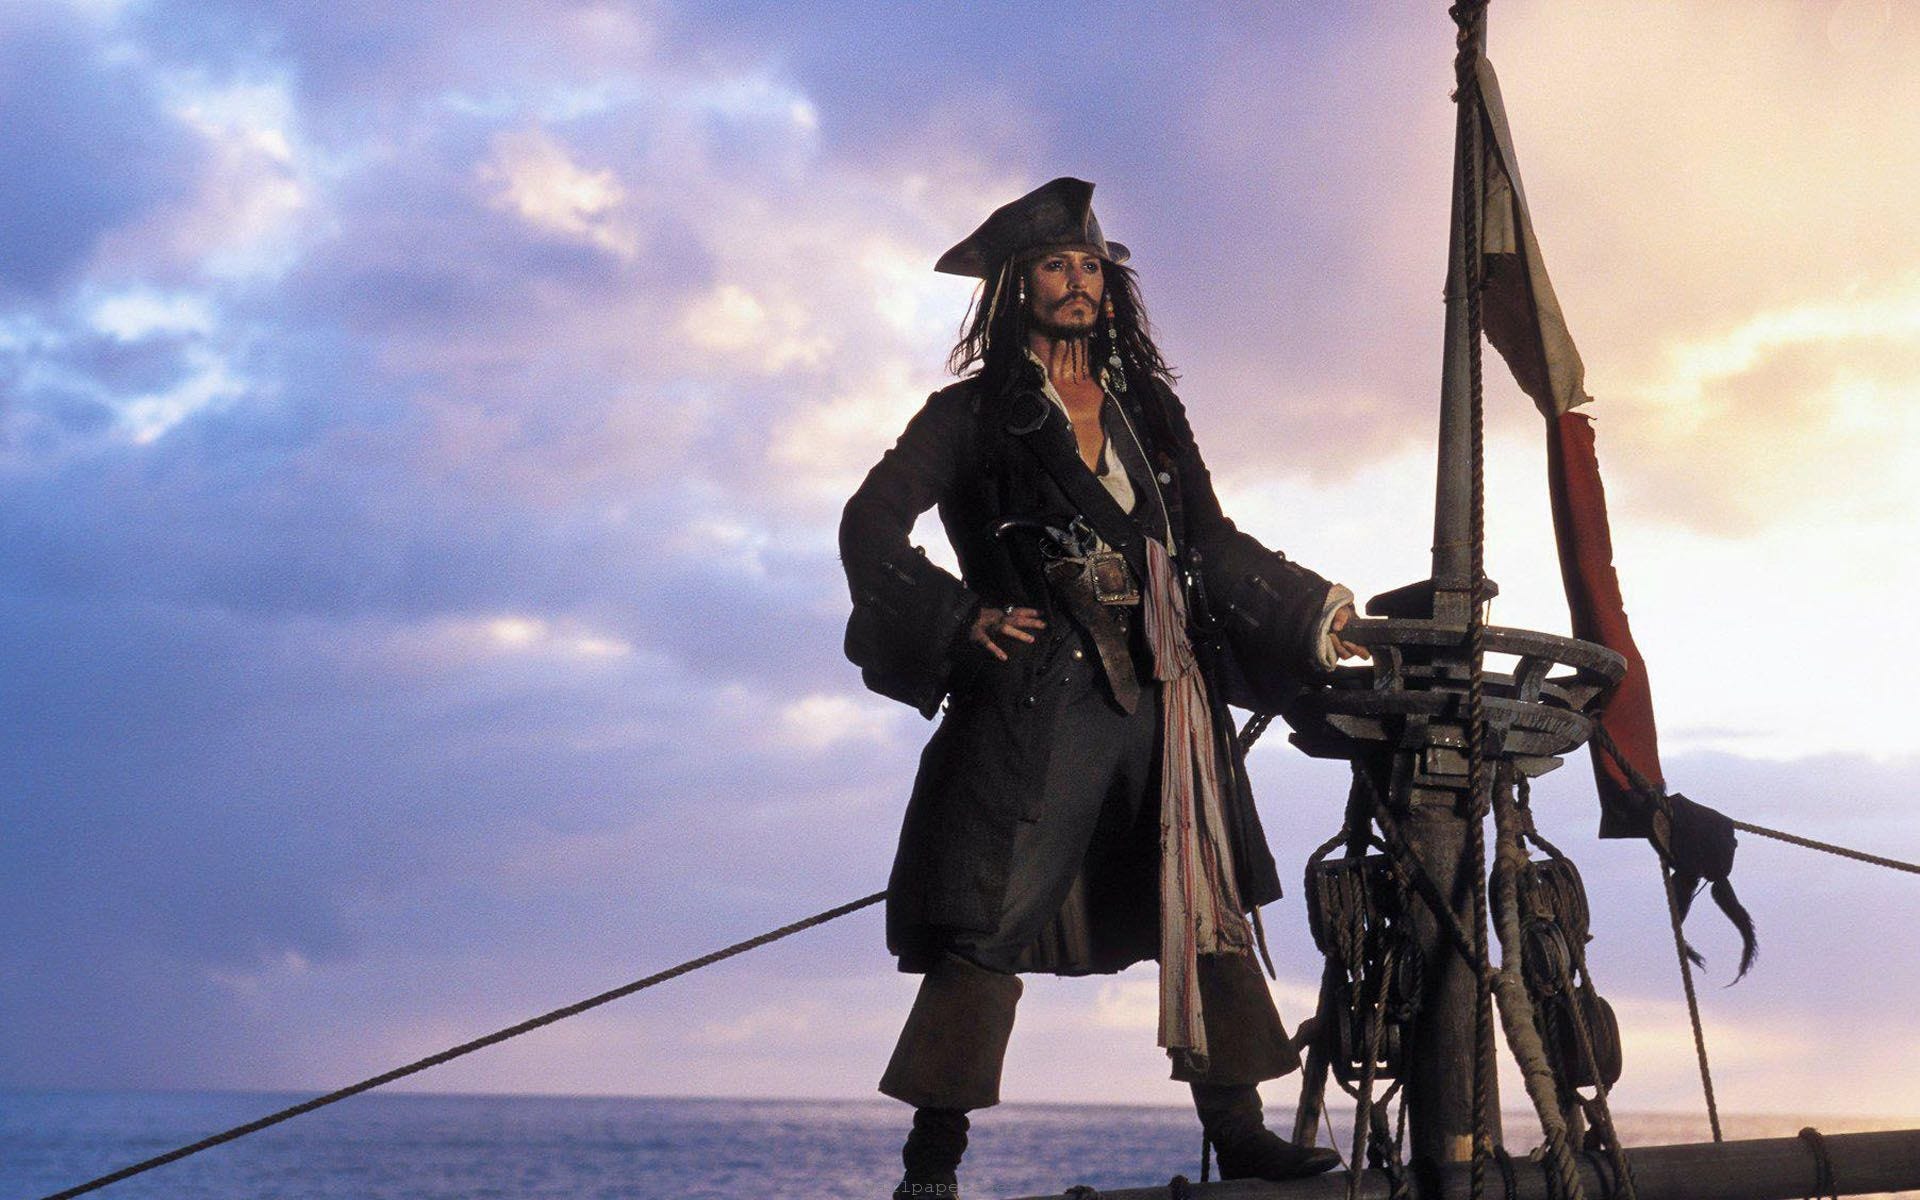 The Diminishing Returns of Captain Jack Sparrow